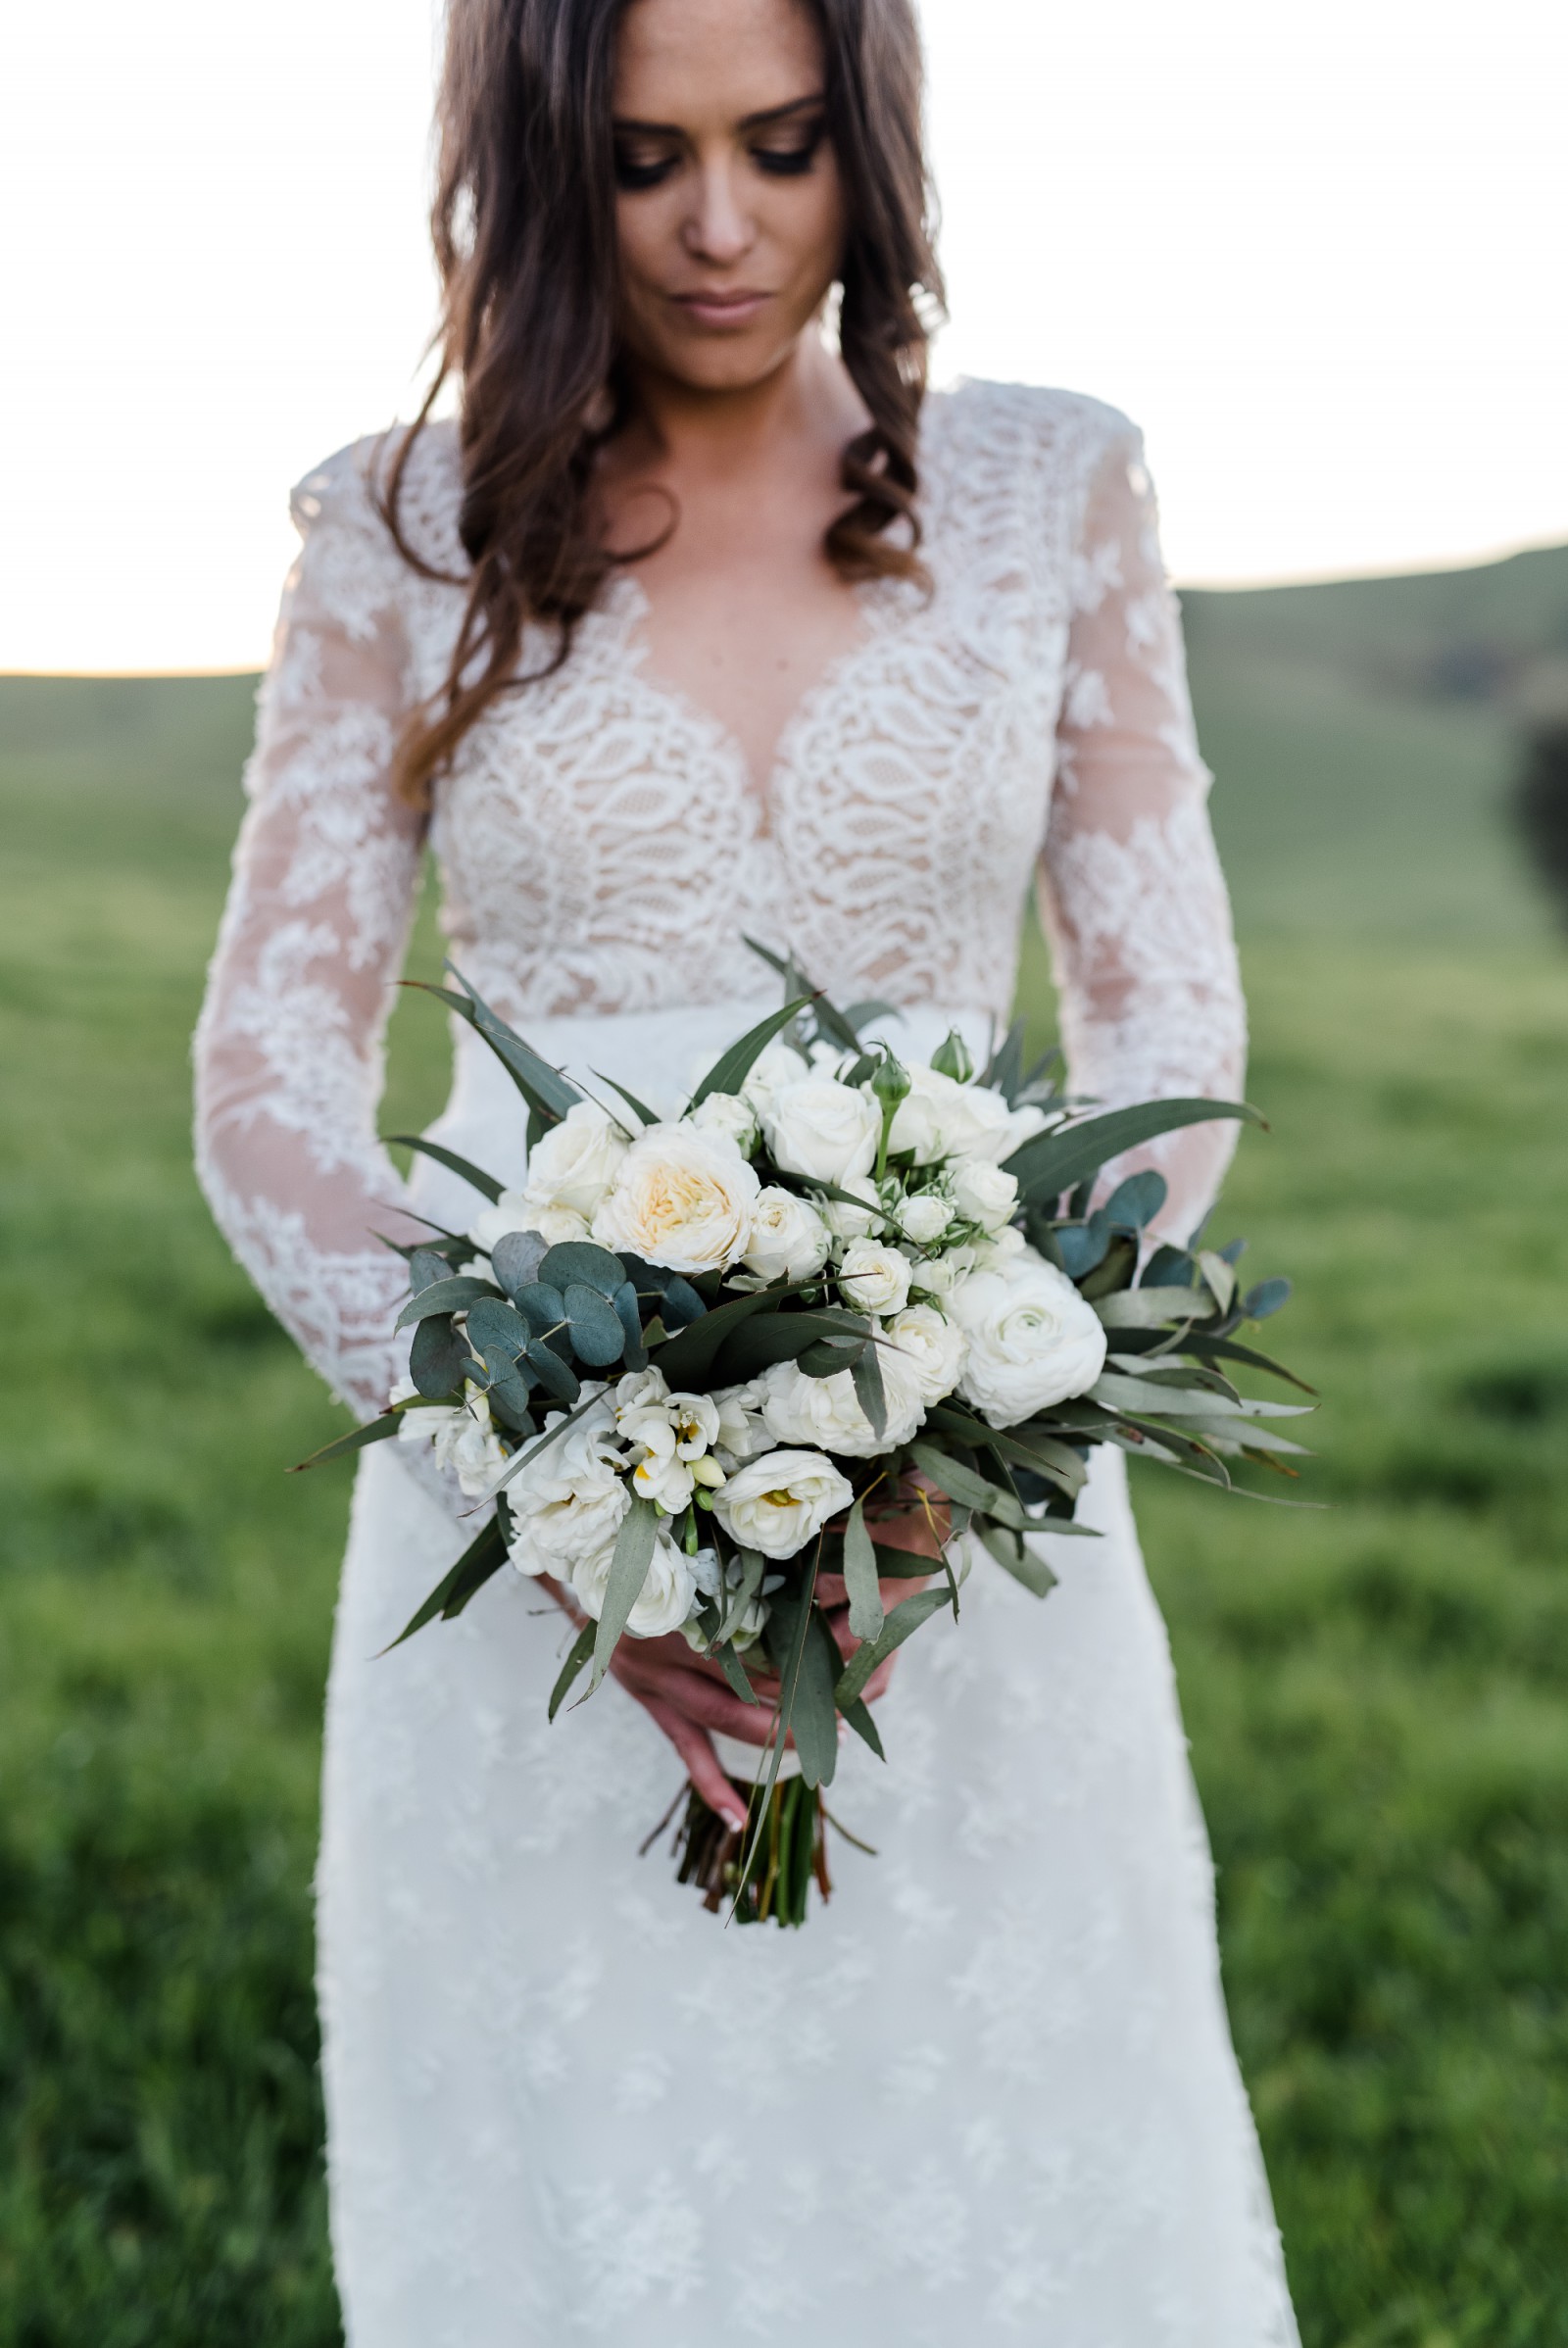 Carolina Herrera Claudette Preloved Wedding Dress Save 59% - Stillwhite